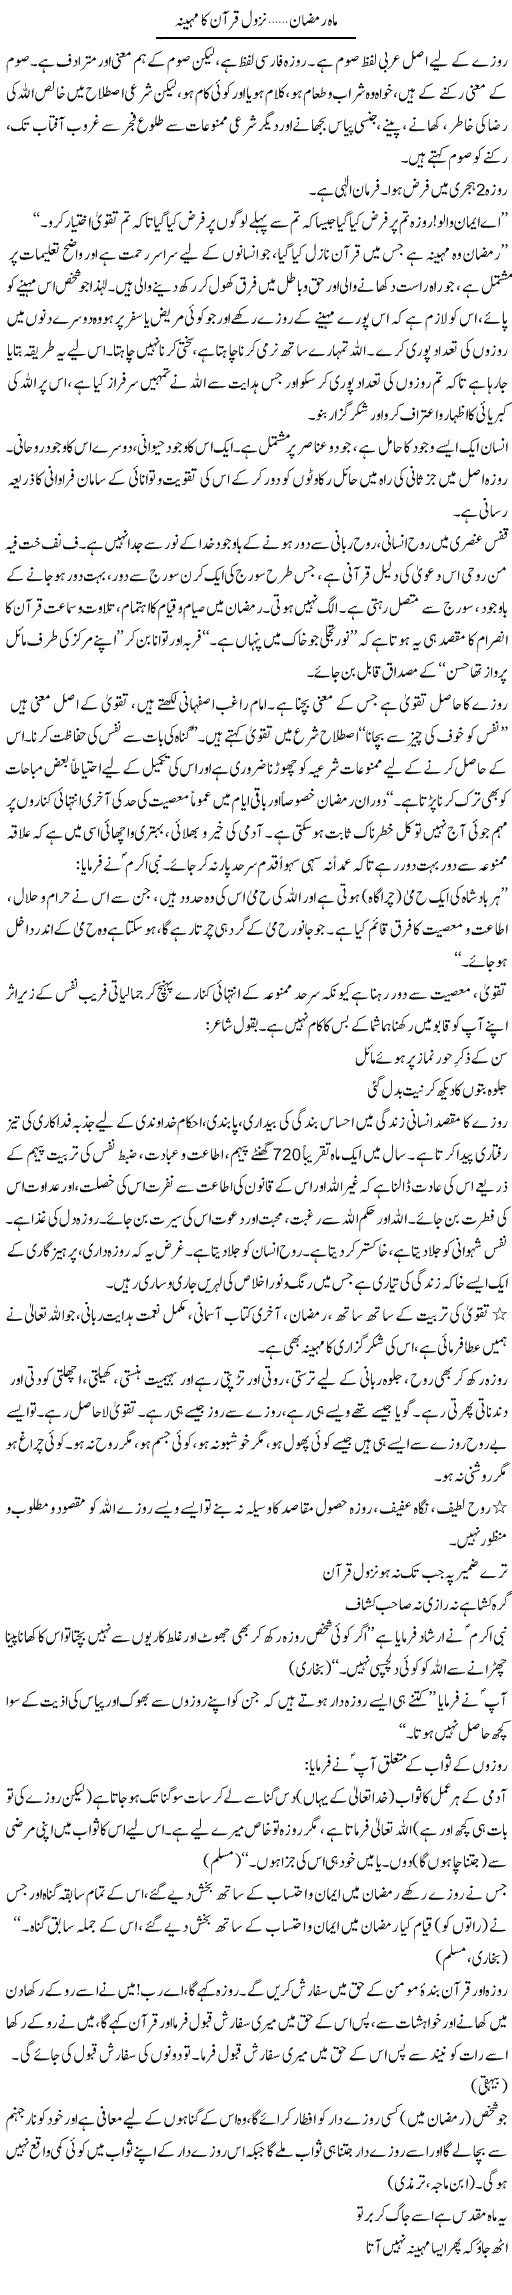 Mahe Ramzan, Nuzul Quran Ka Maheena | Dr. Muhammad Tayyab Khan Singhanvi | Daily Urdu Columns